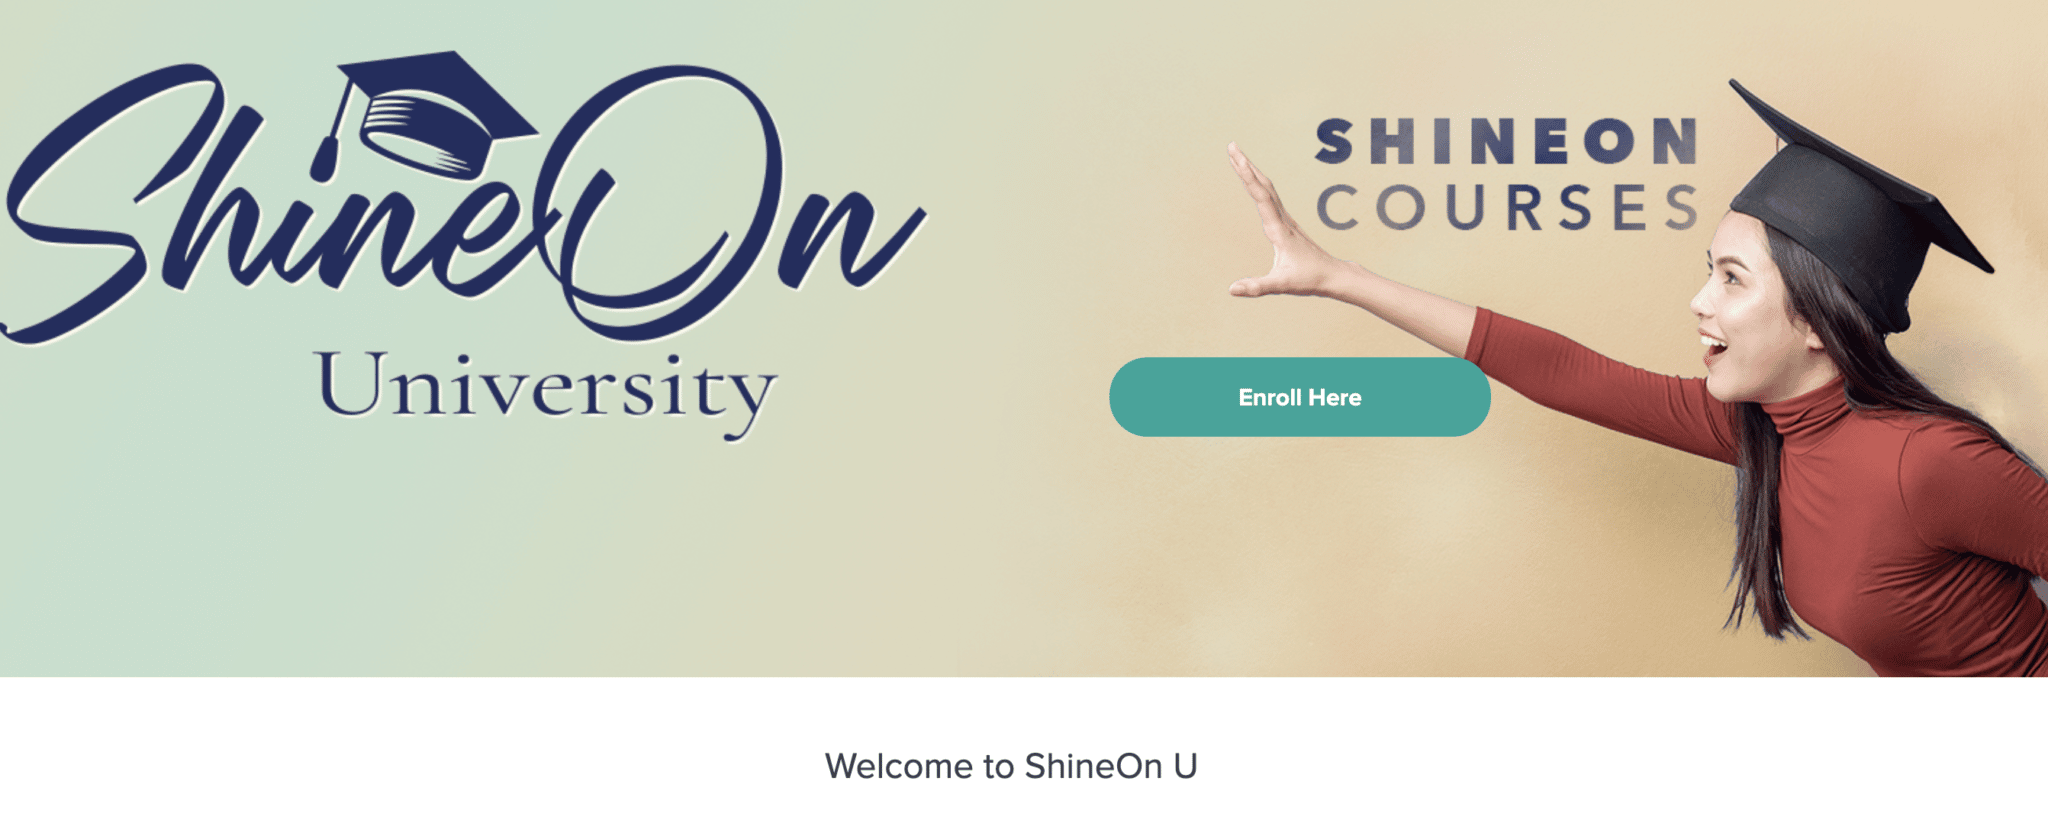 ShineOn University